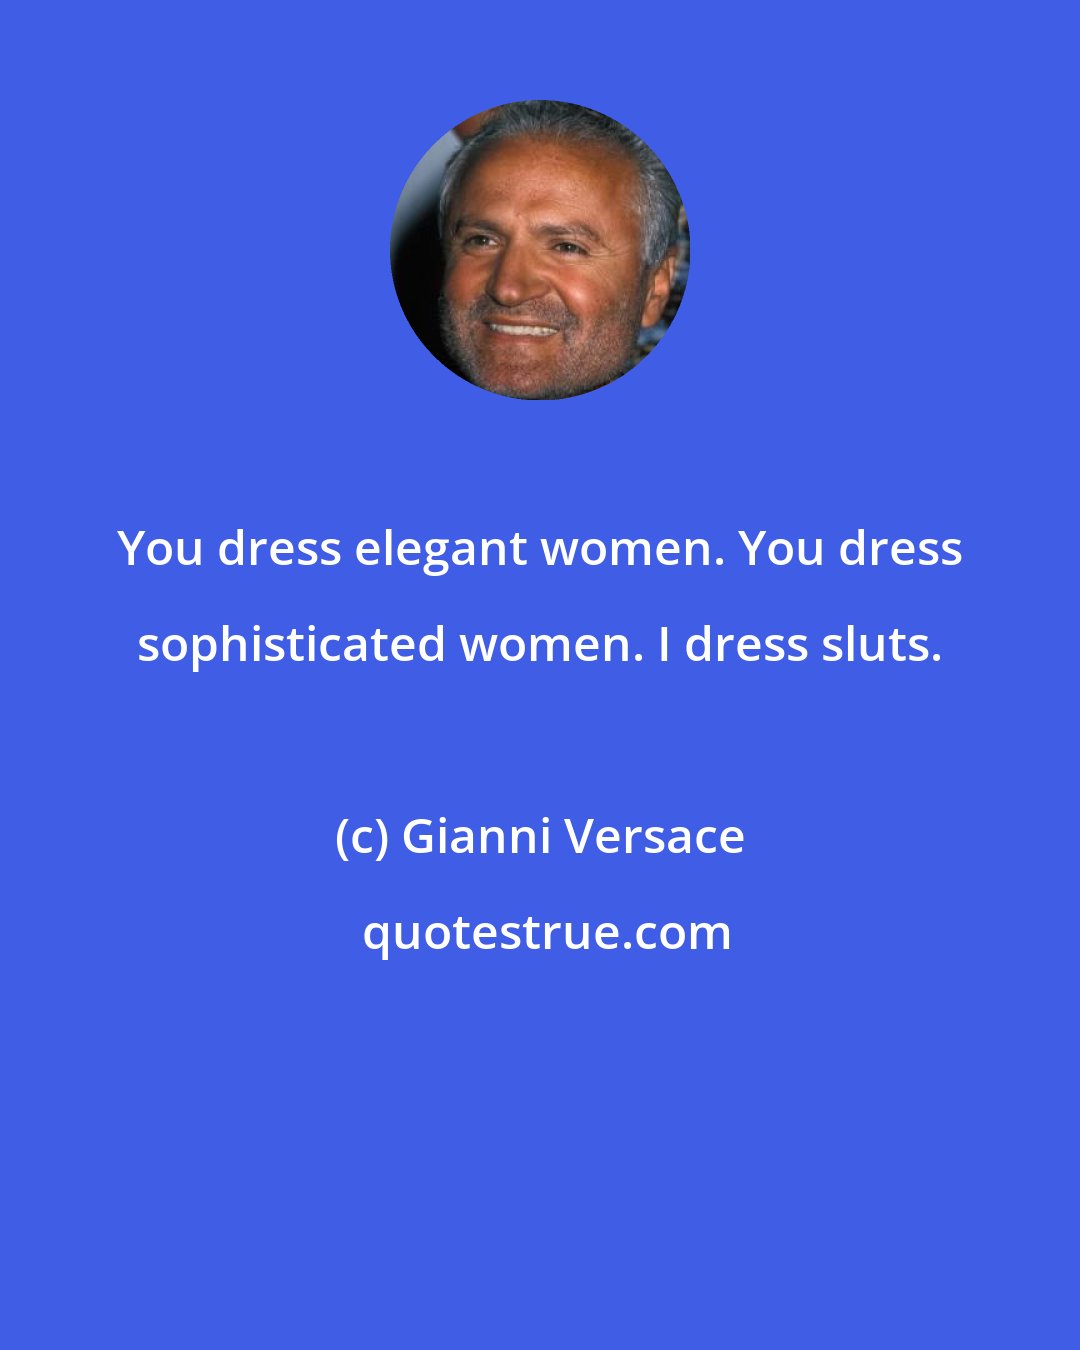 Gianni Versace: You dress elegant women. You dress sophisticated women. I dress sluts.